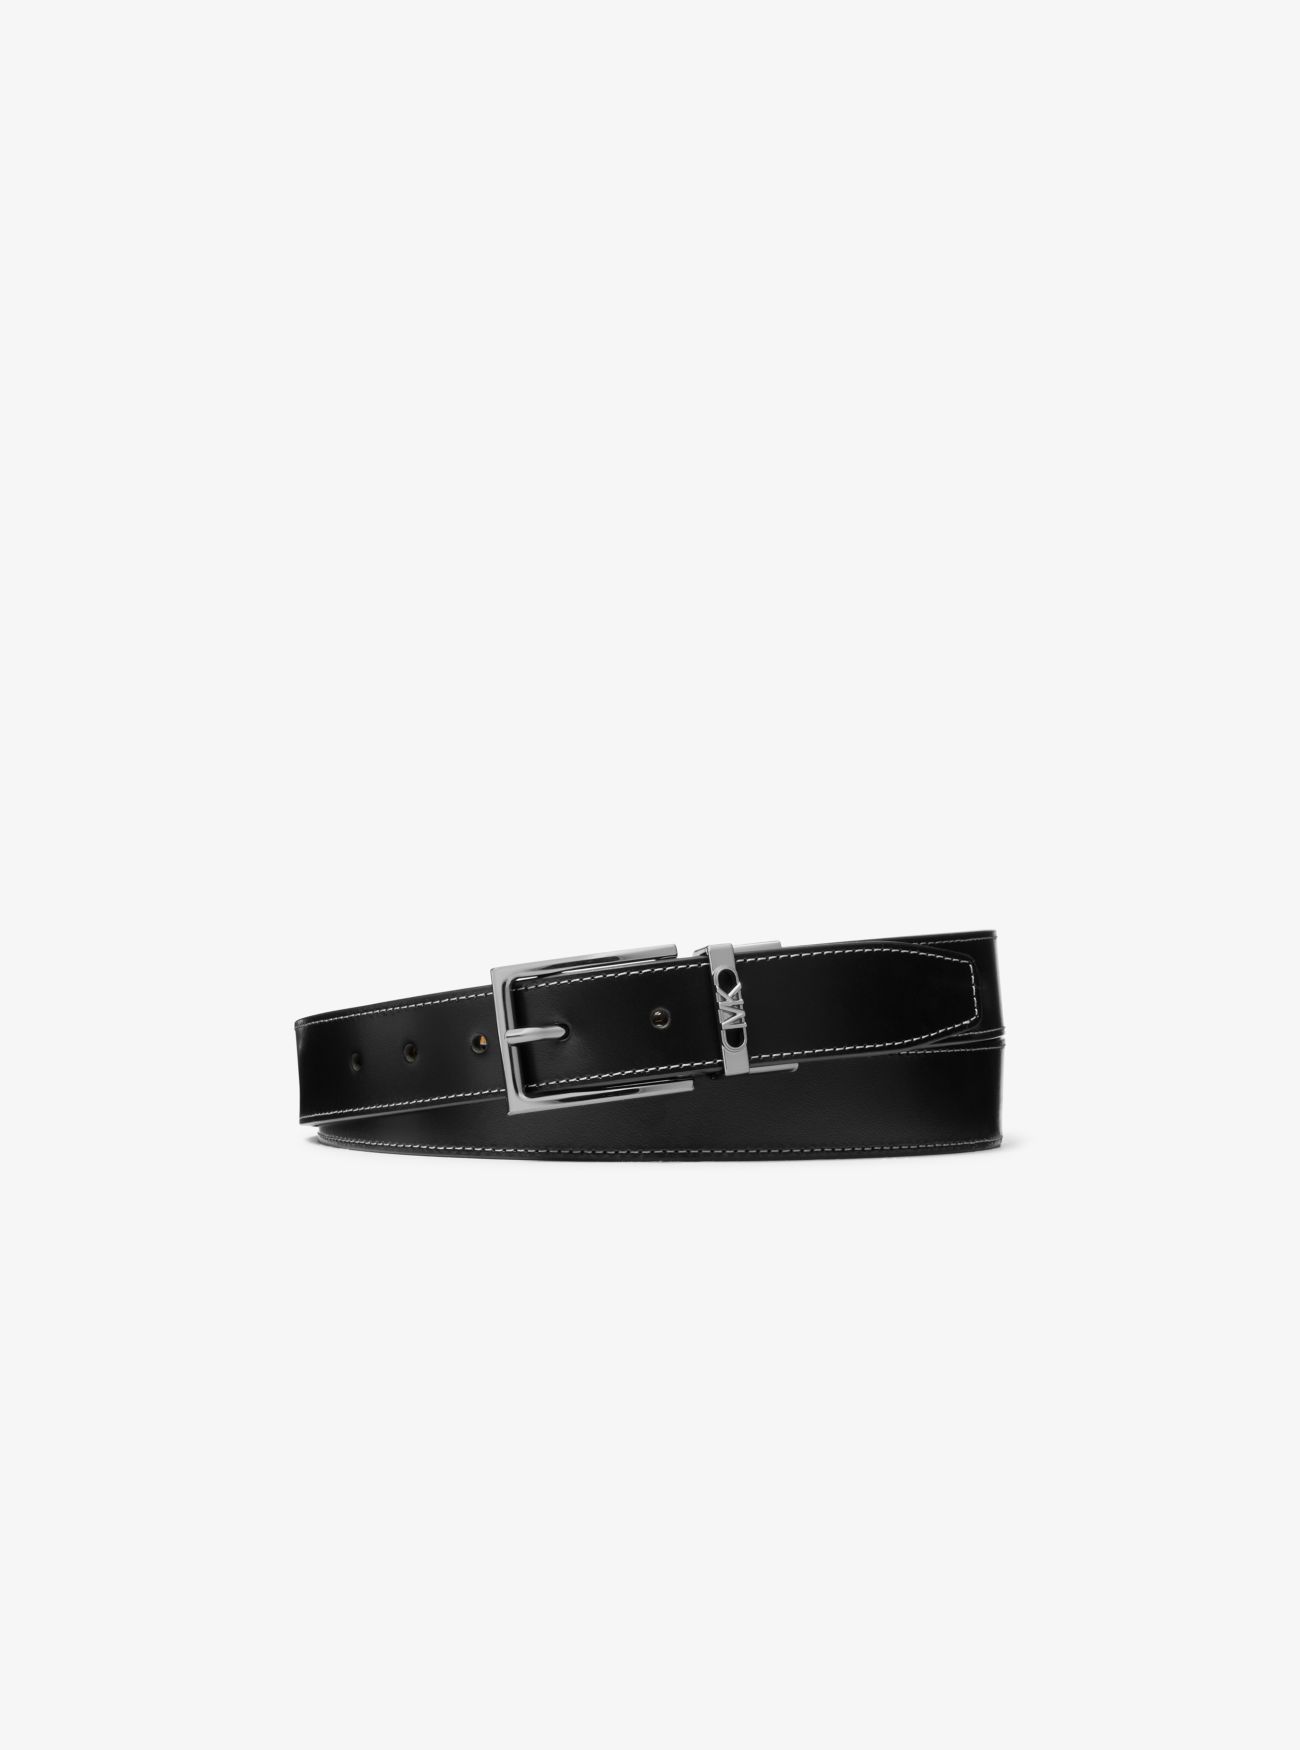 MK Reversible Logo and Leather Belt - Black - Michael Kors